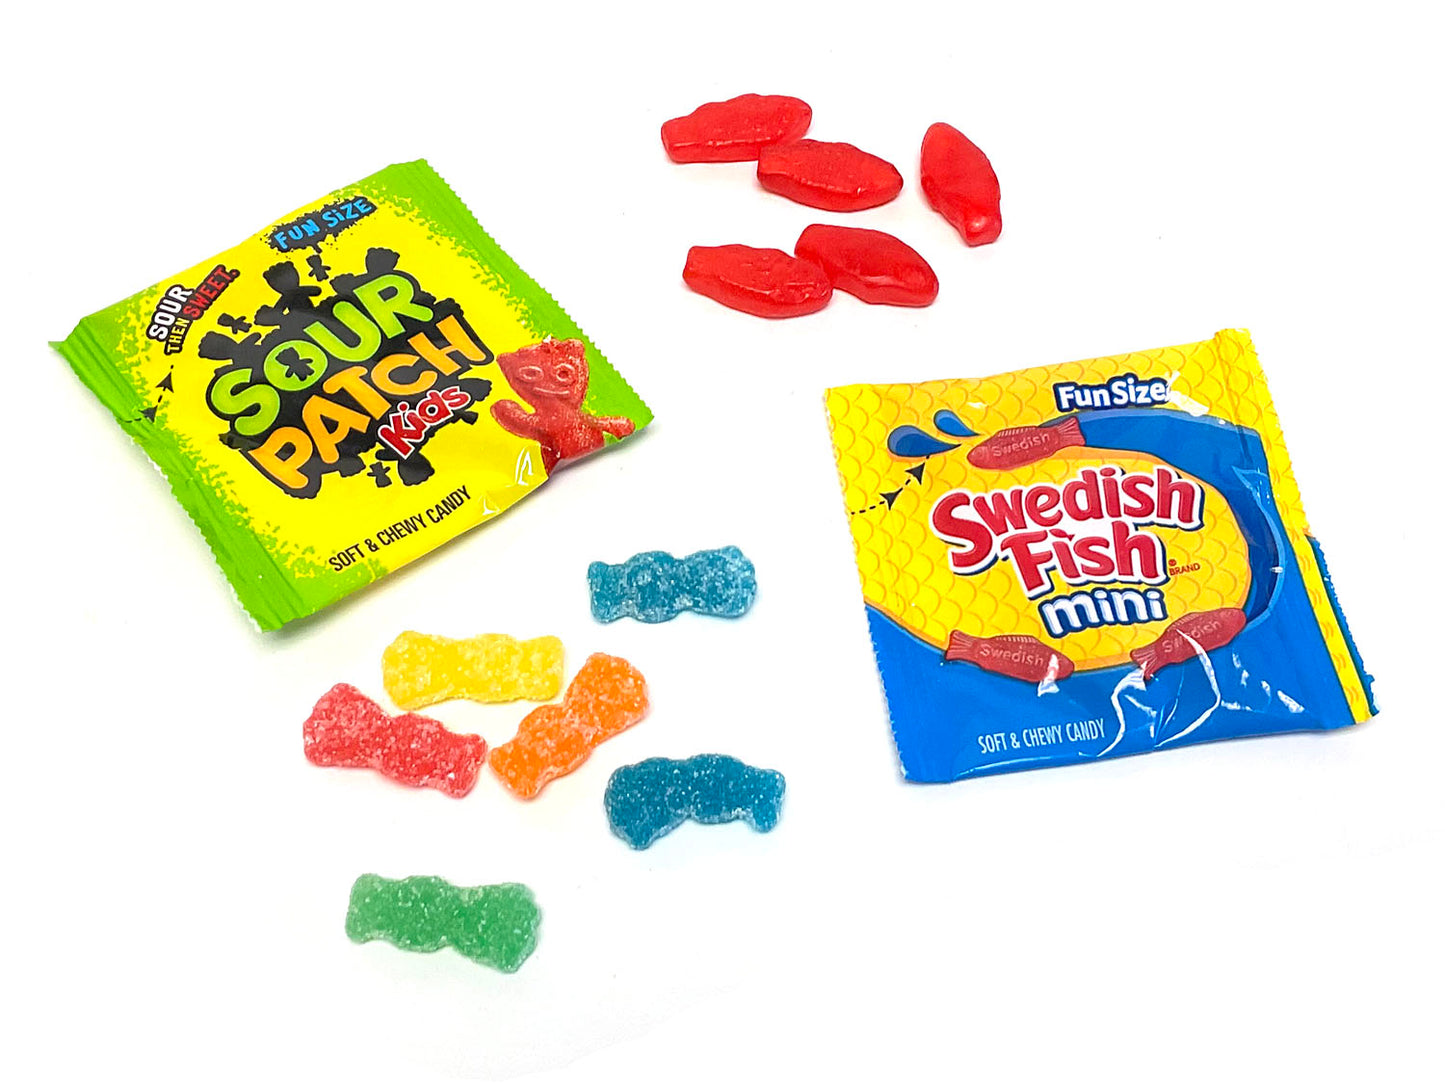 Sour Patch / Swedish Fish mini bags 